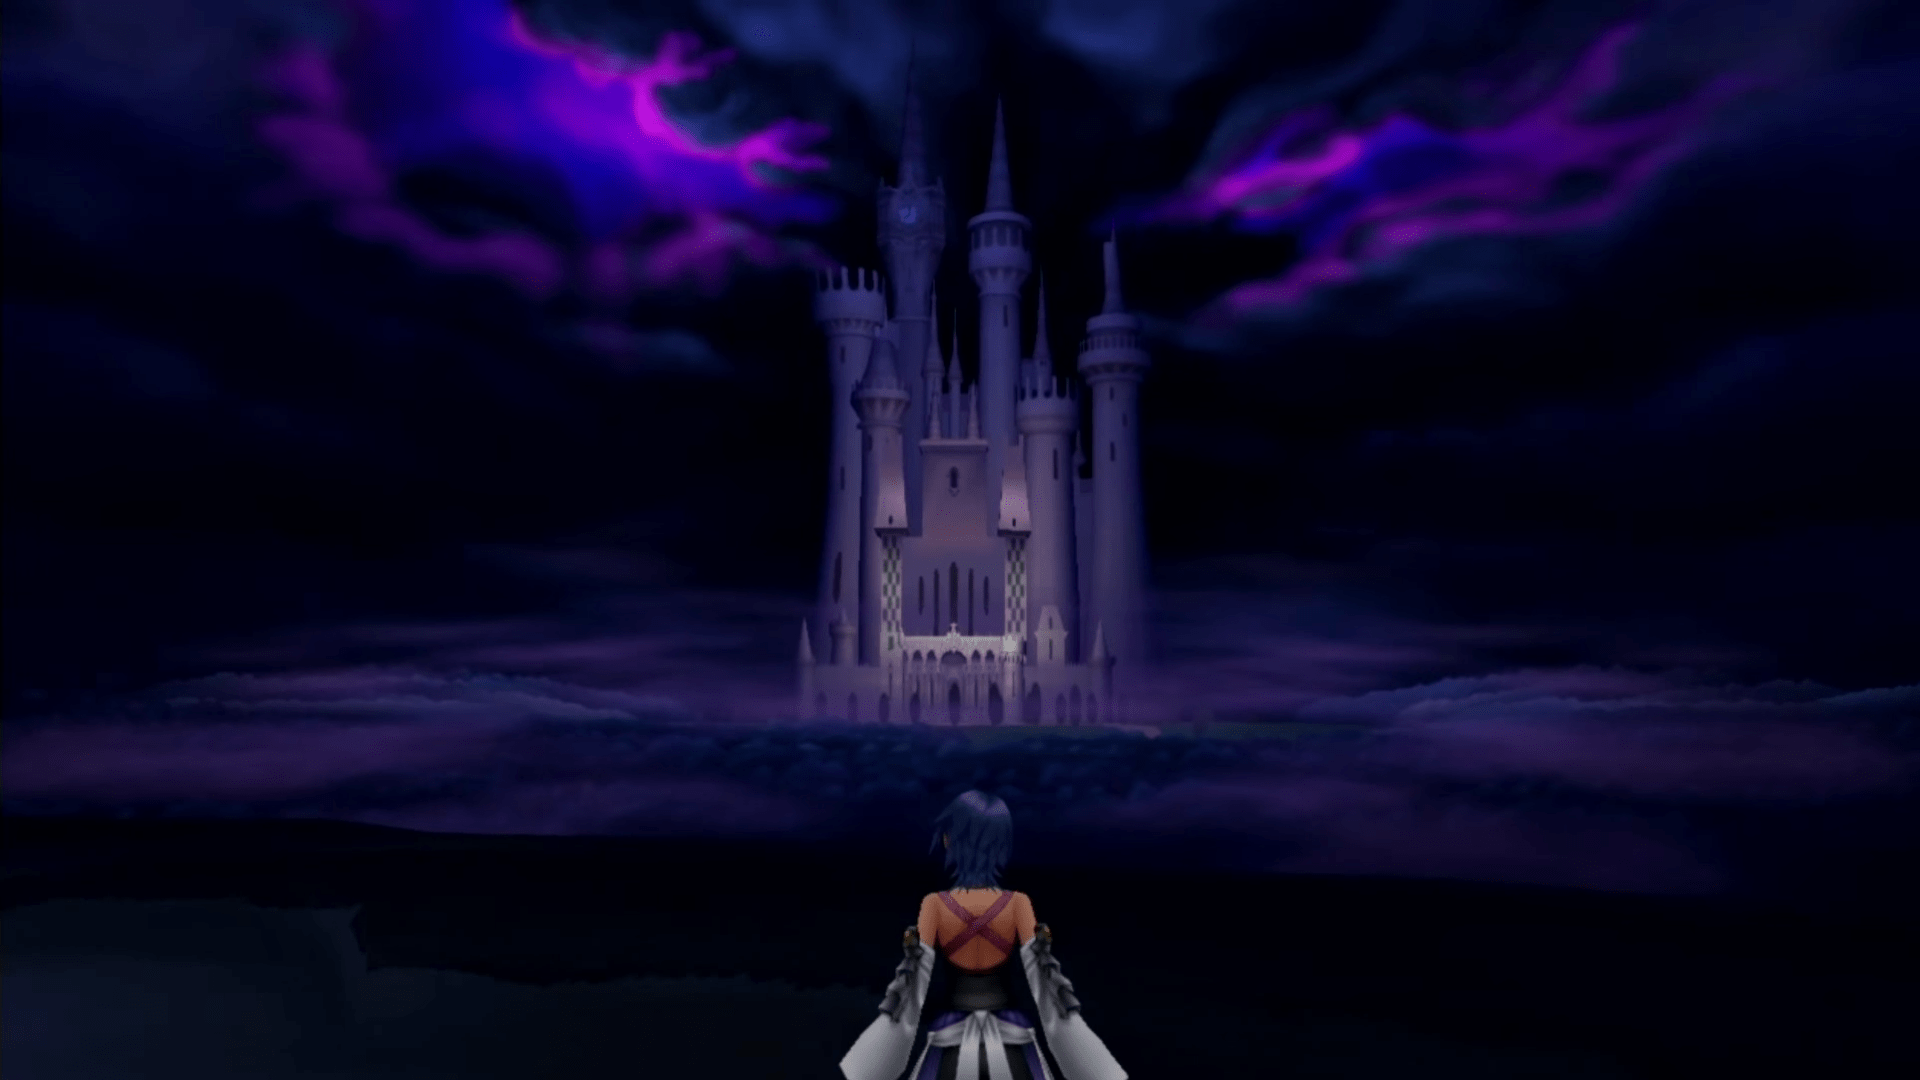 Kingdom Hearts 2.8 Gives Us A Taste Of Kingdom Hearts III, And It’s Good